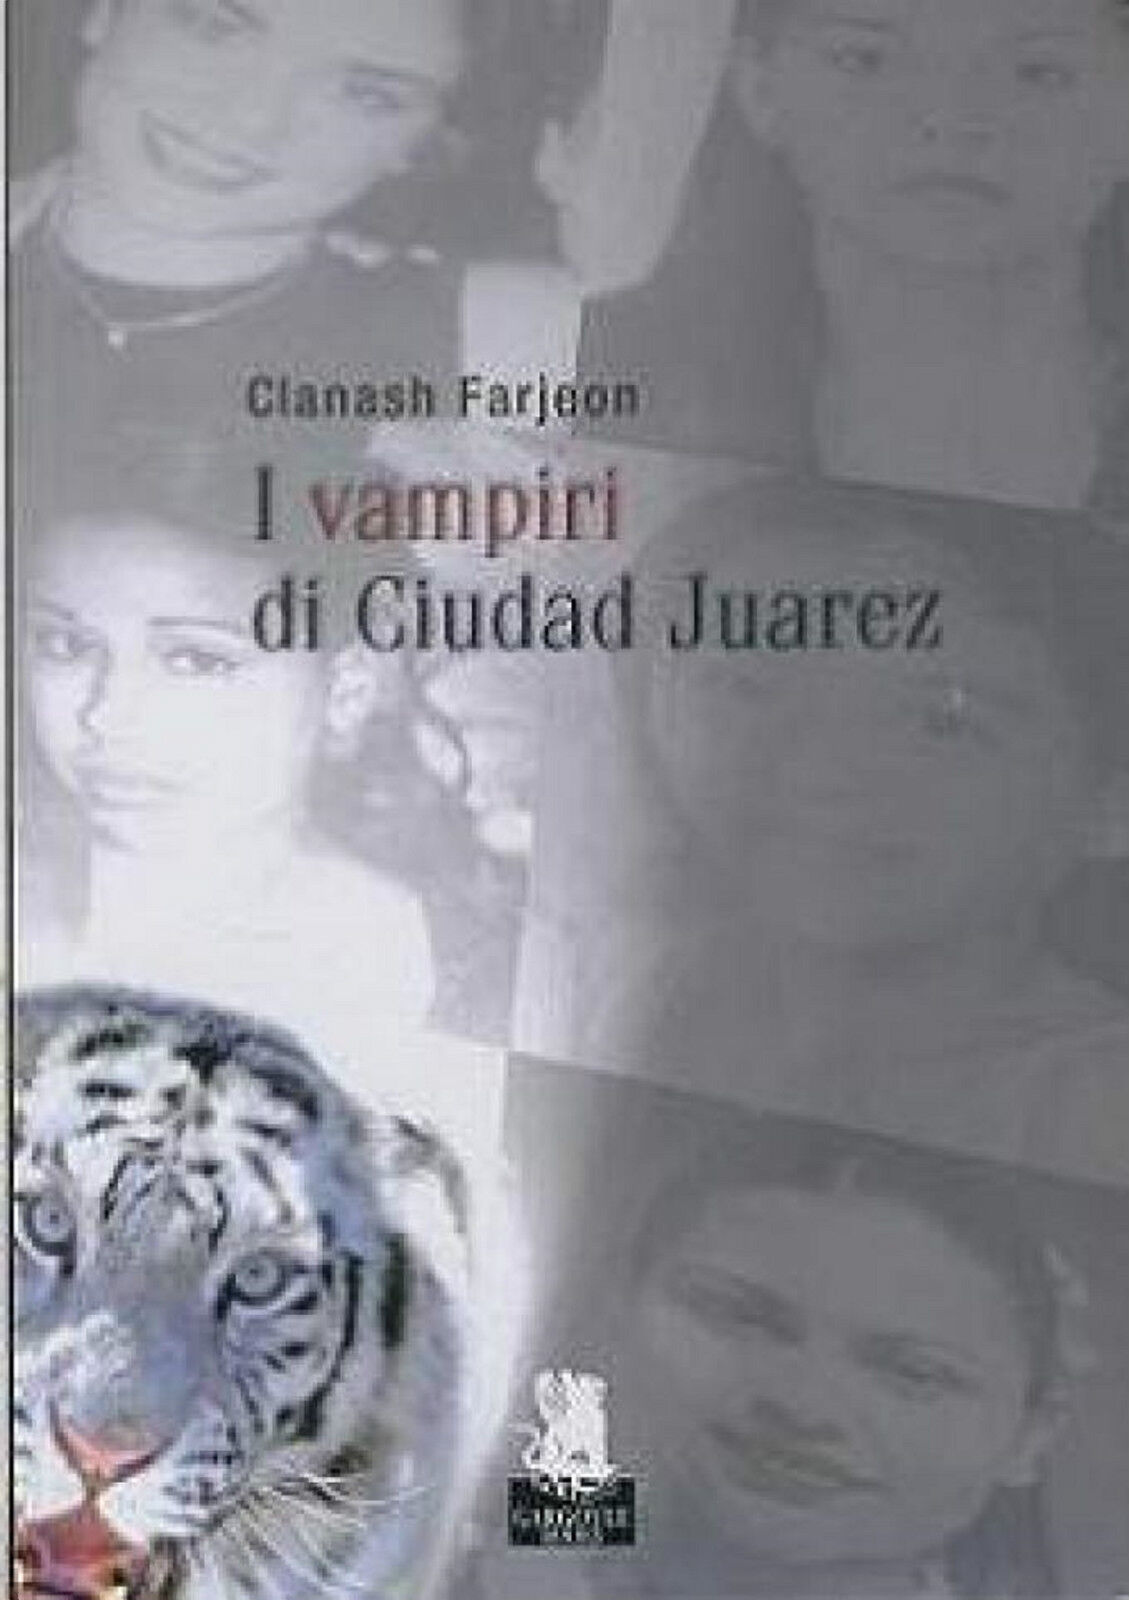  I vampiri di Ciudad Juarez - Clanash Farjeon - Gargoyle - 2010 C